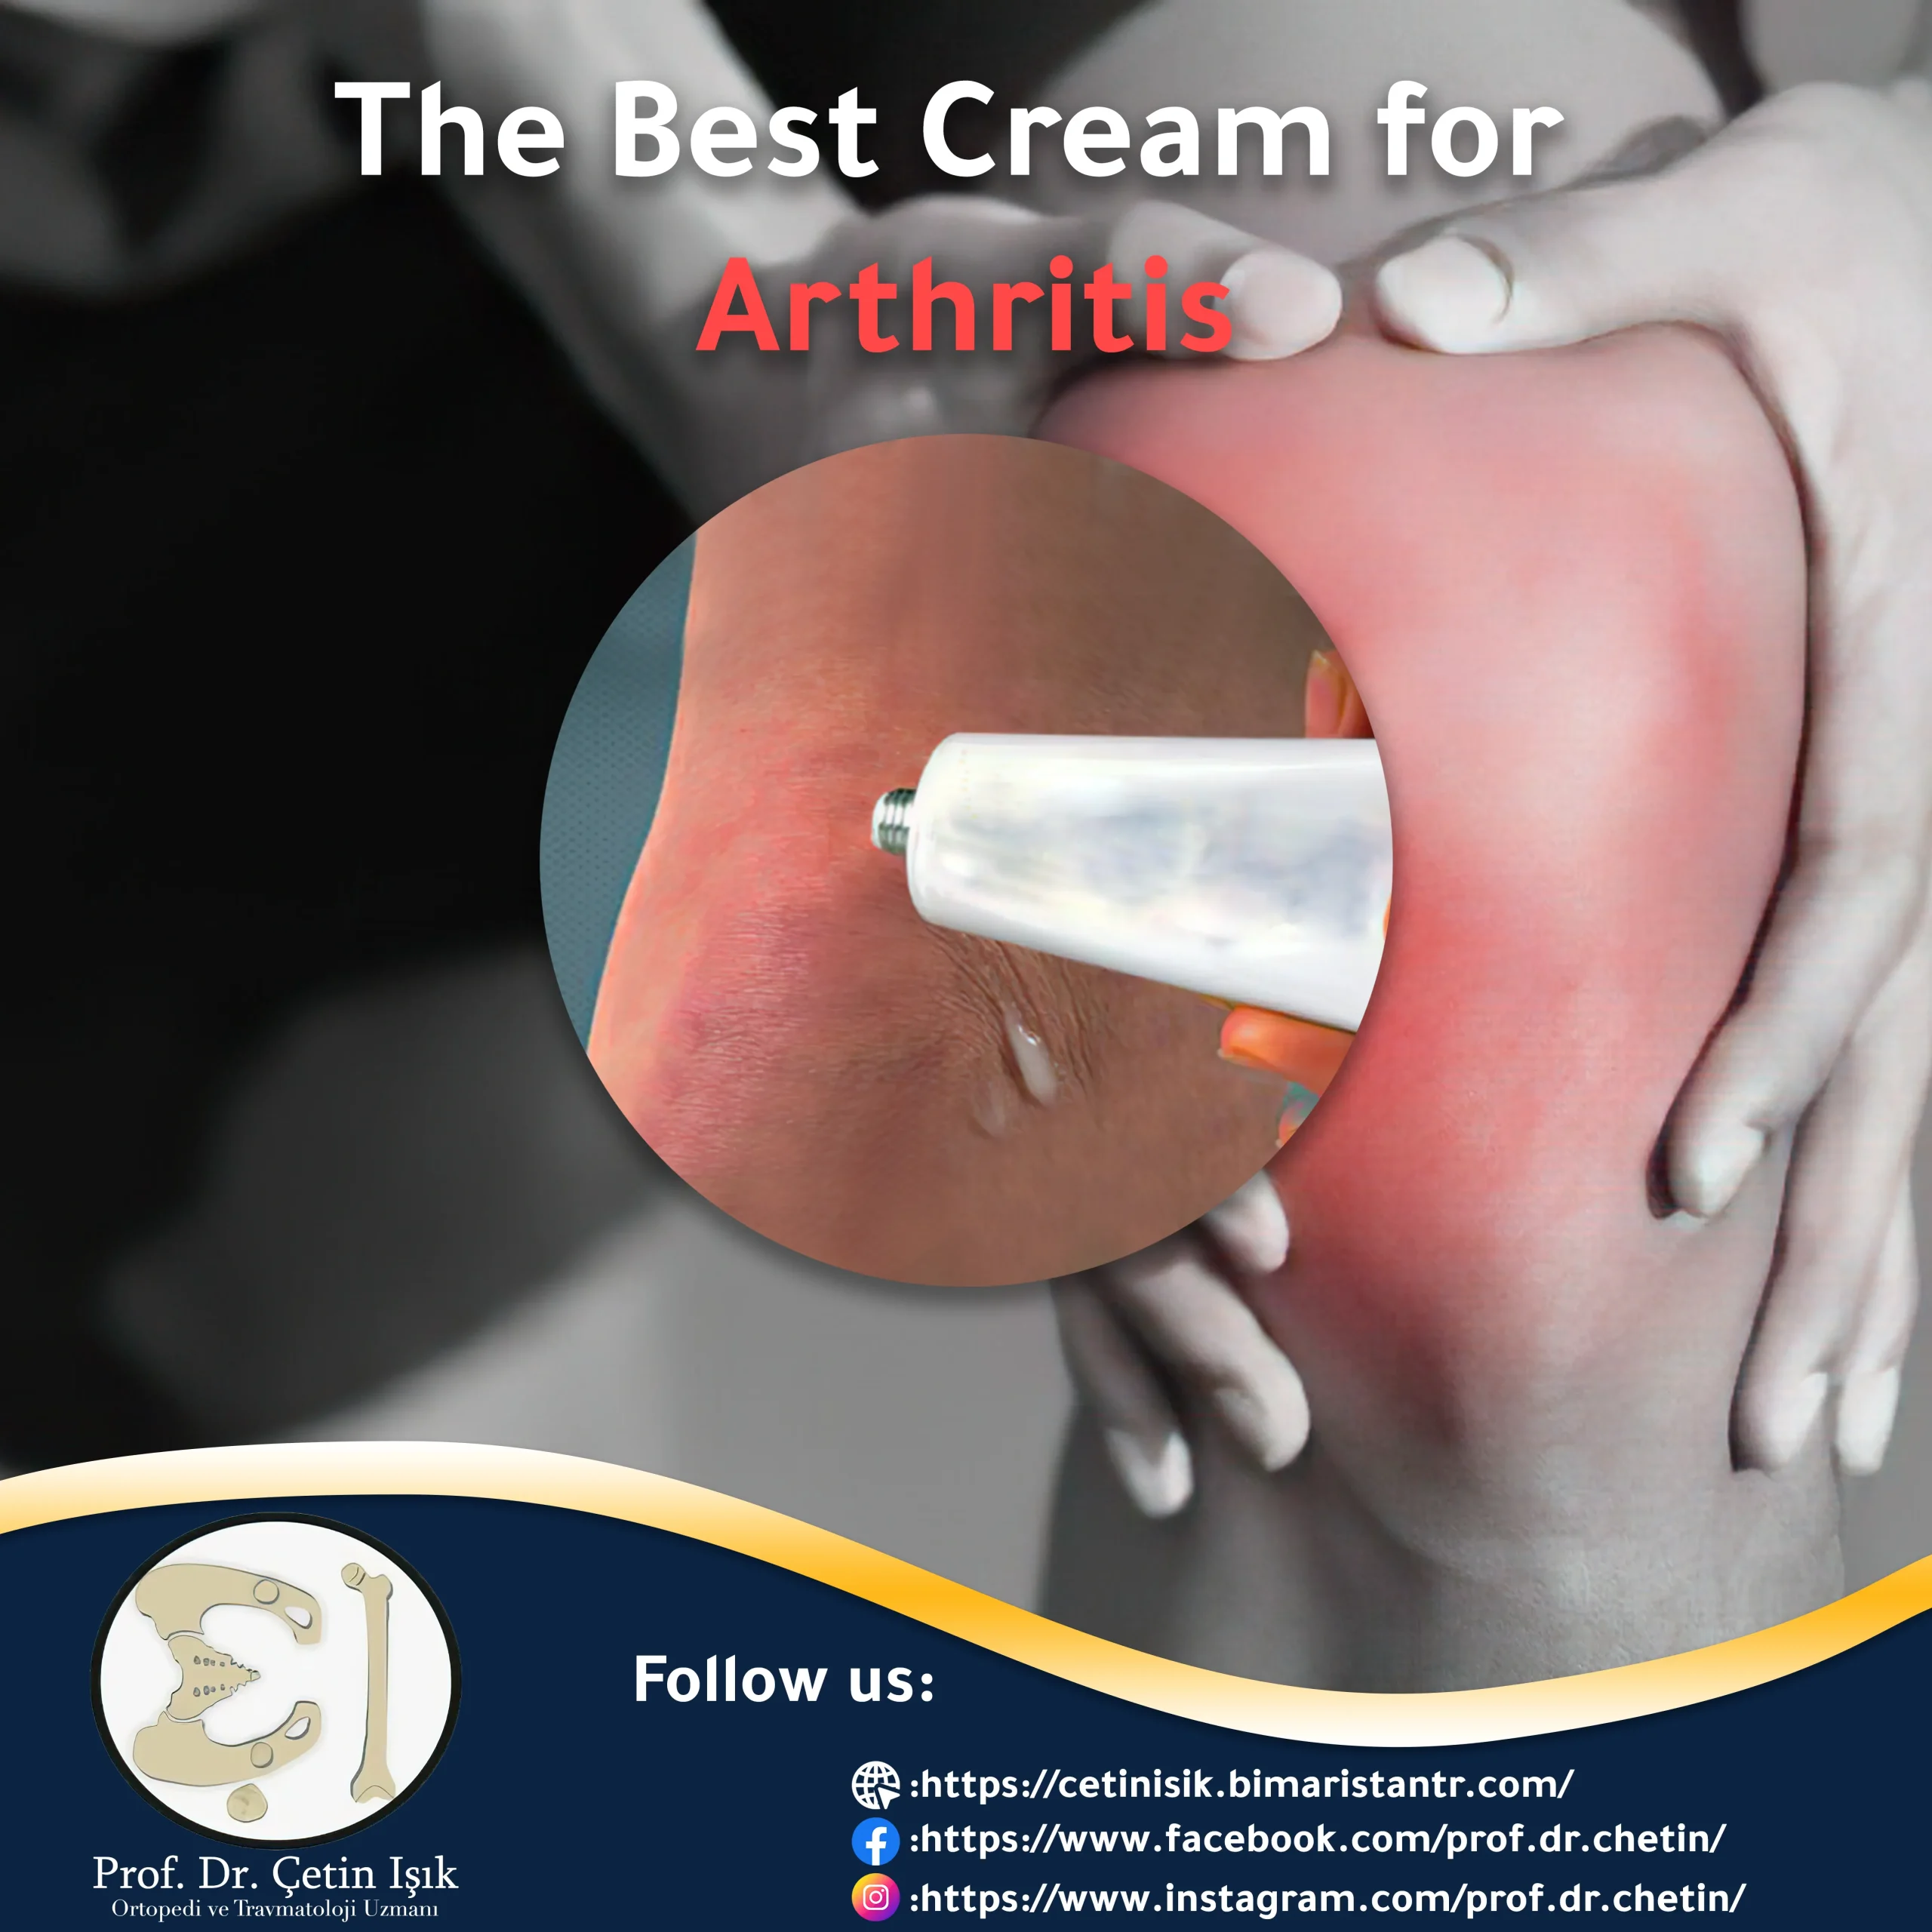 The Best Cream for Arthritis in Pharmacies 2022